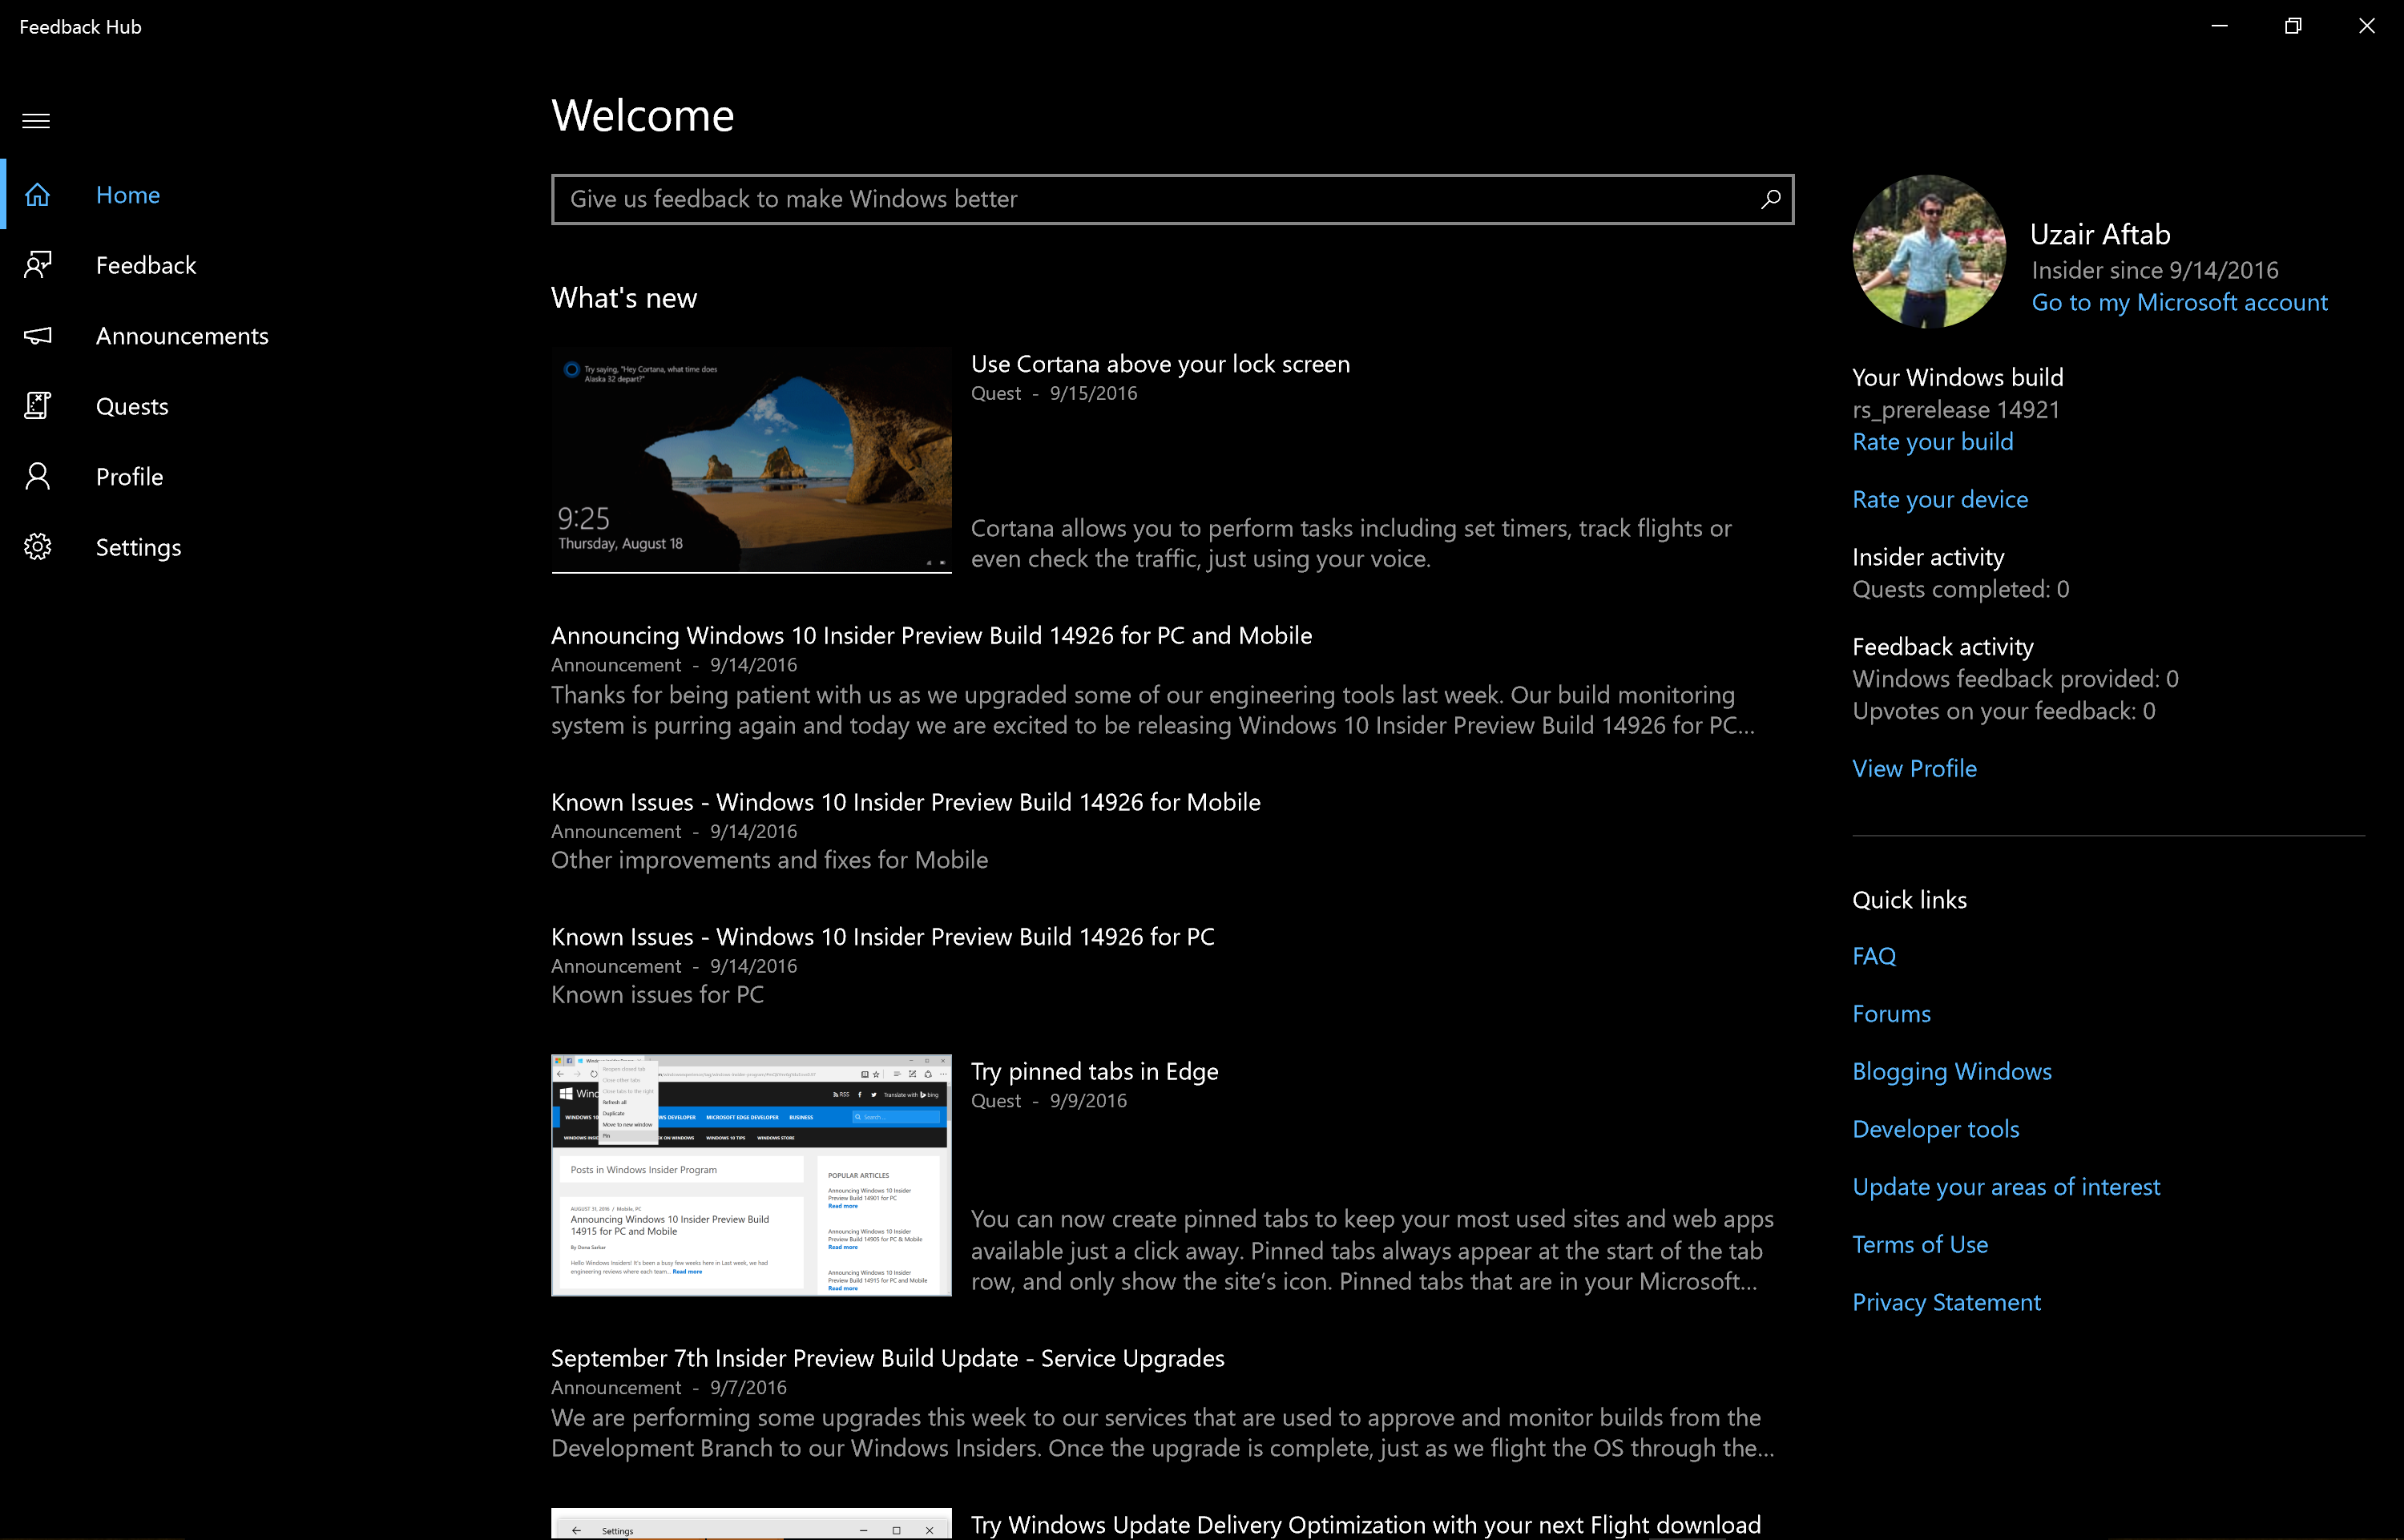 Insider Preview App update - Feedback Hub app version 1.1608.2441.0 ...